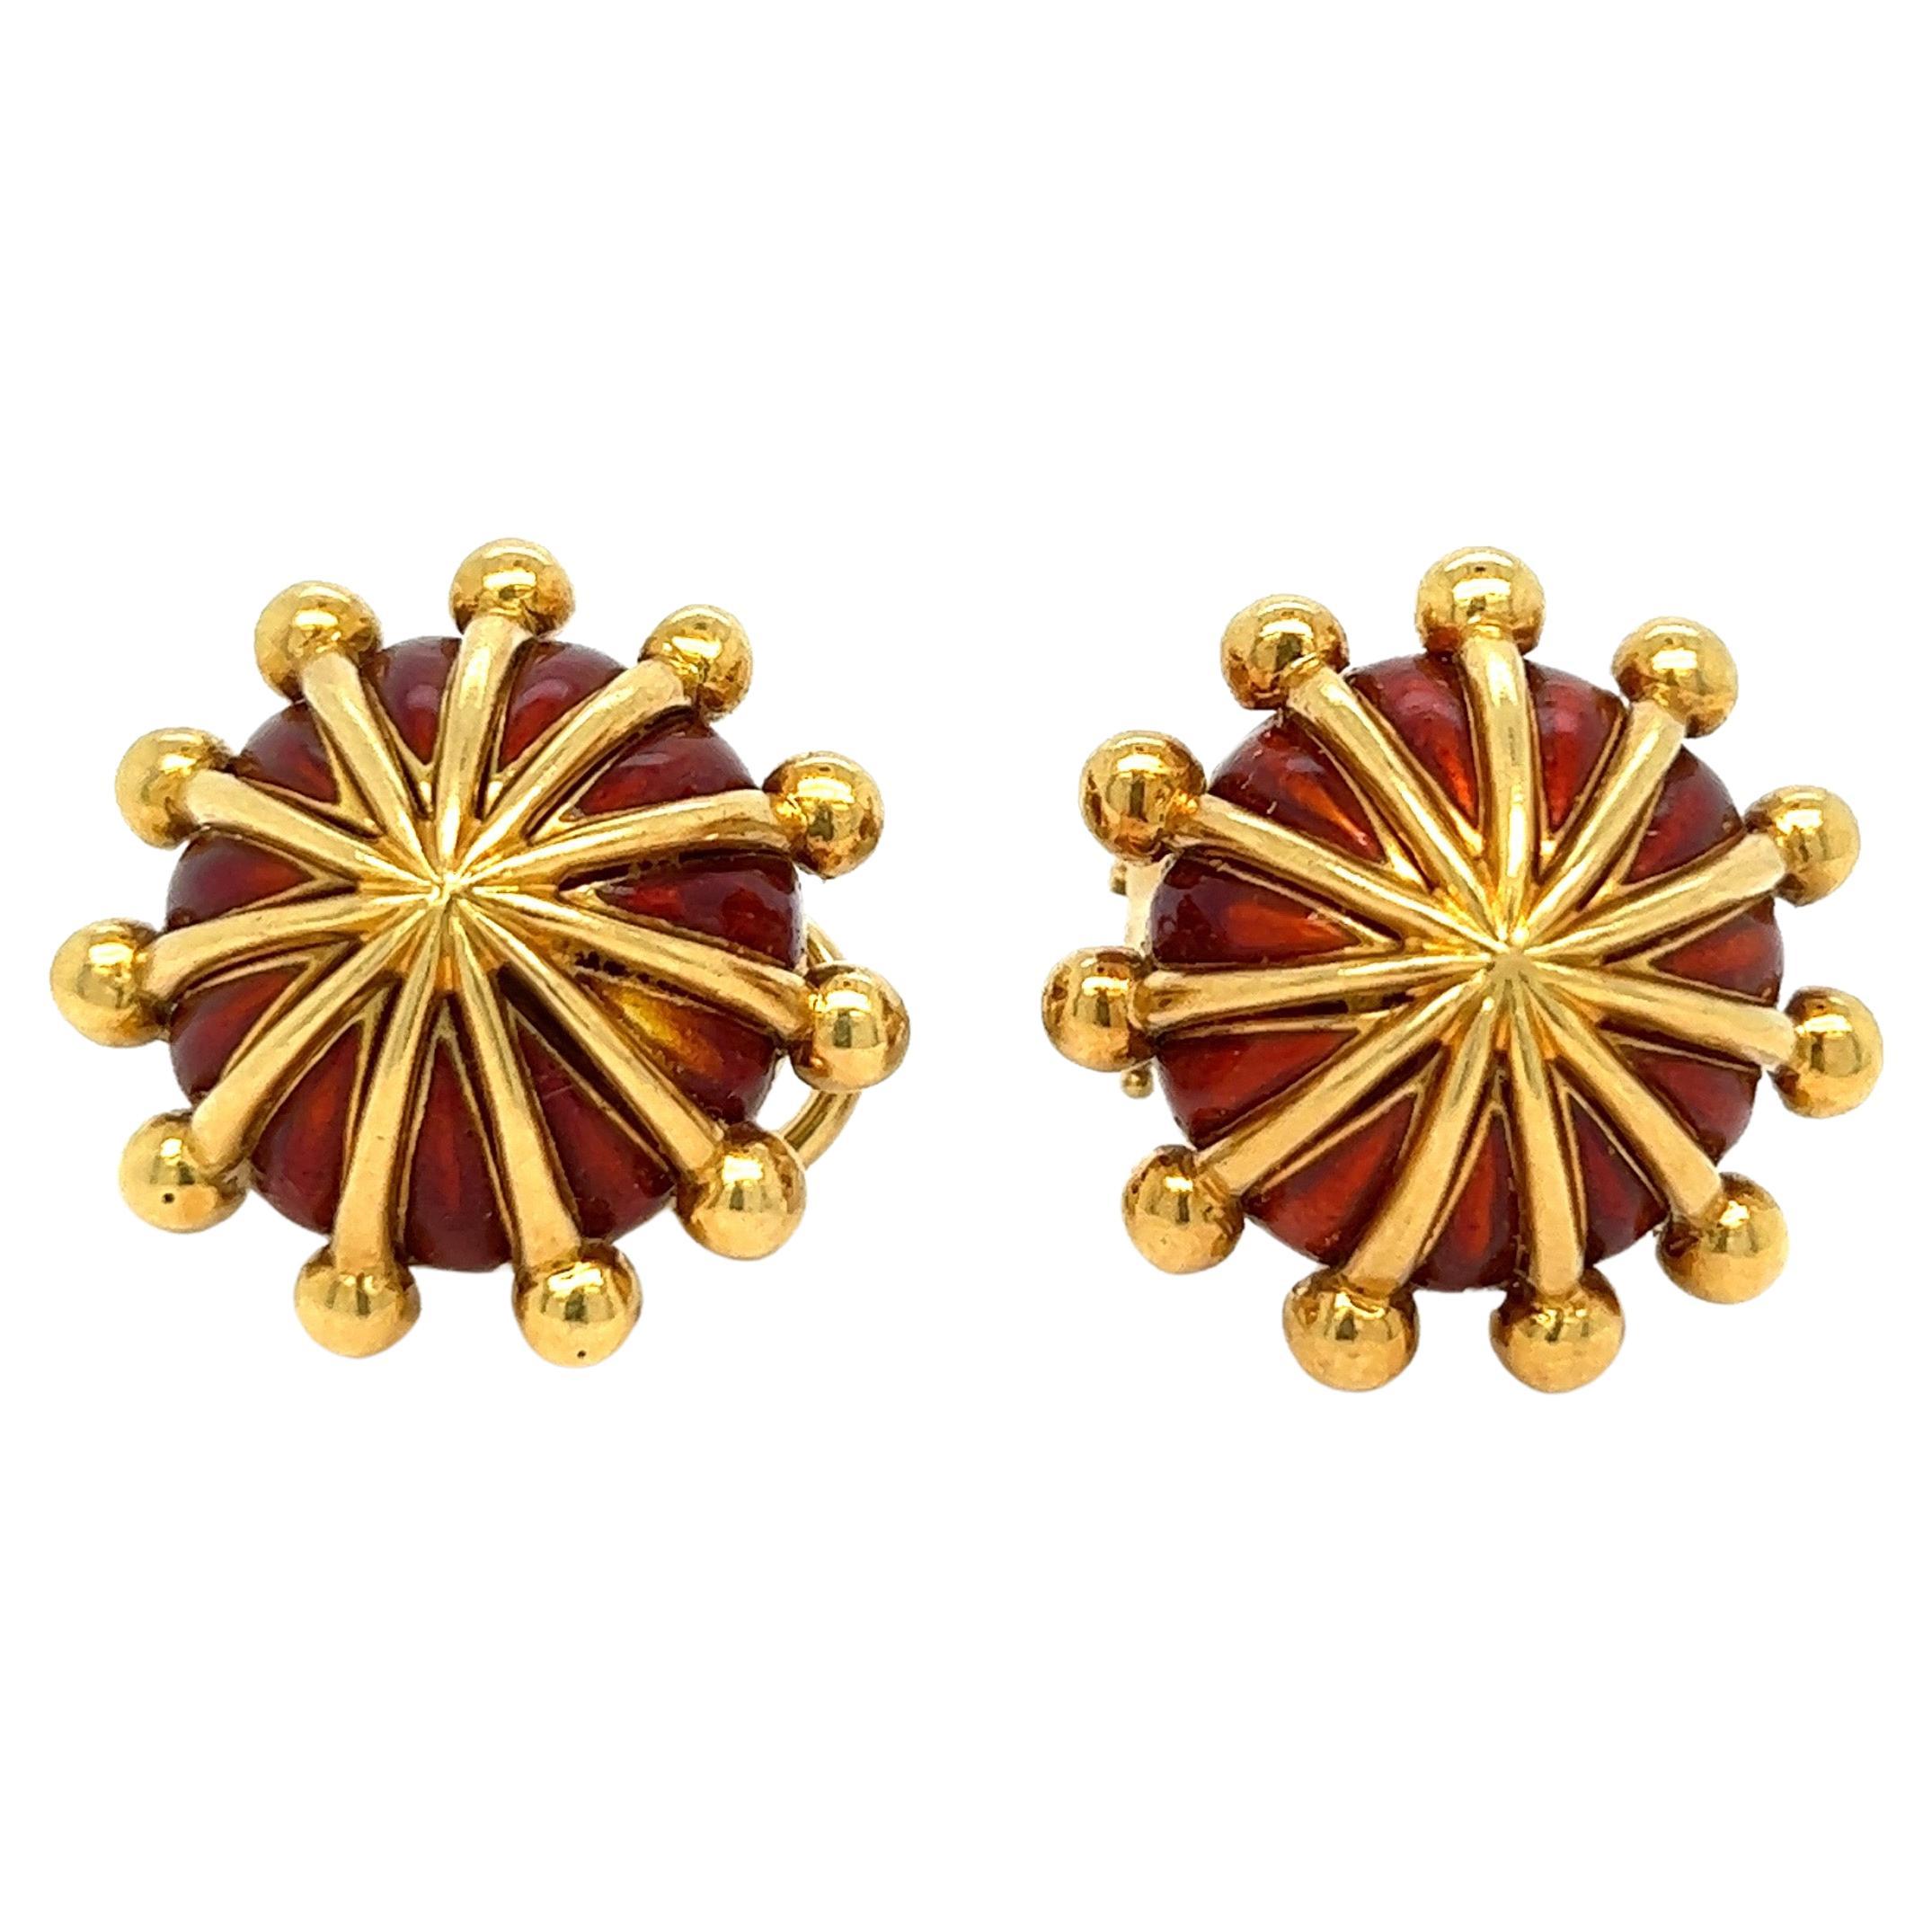 Jean Schlumberger für Tiffany & Co. Gold-Ohrringe mit roter Emaille